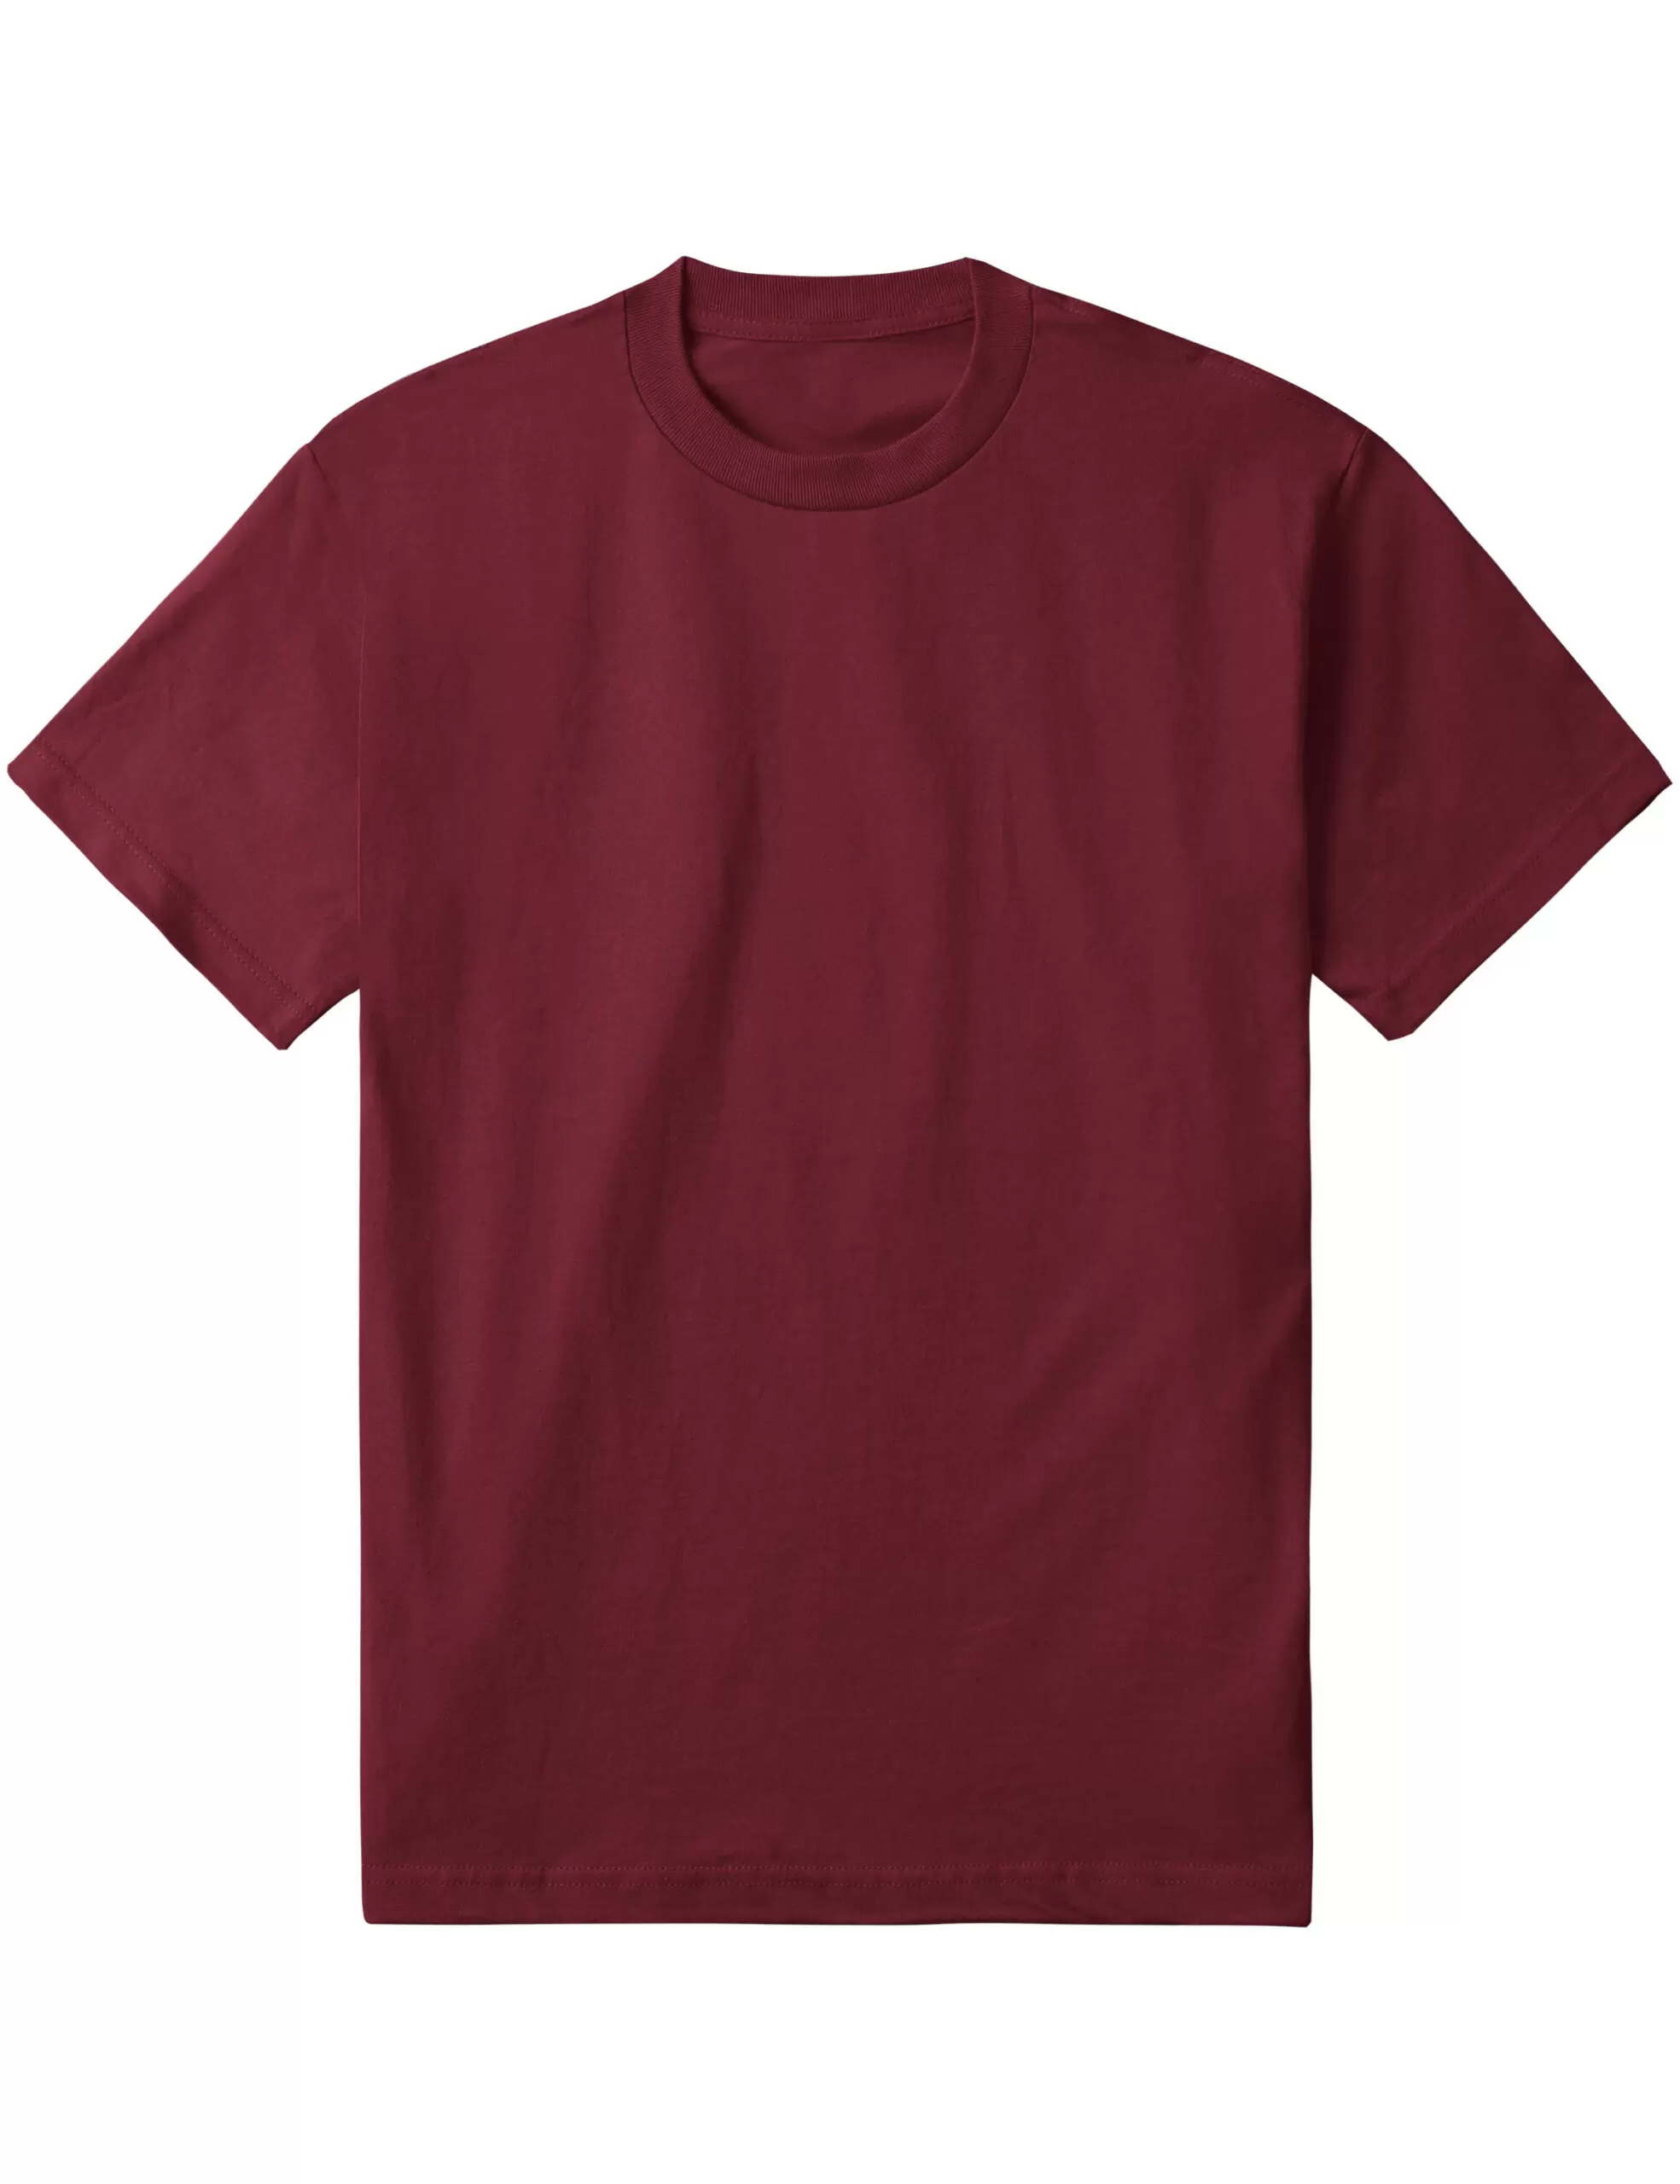 Basic T-shirts Haldimand County 